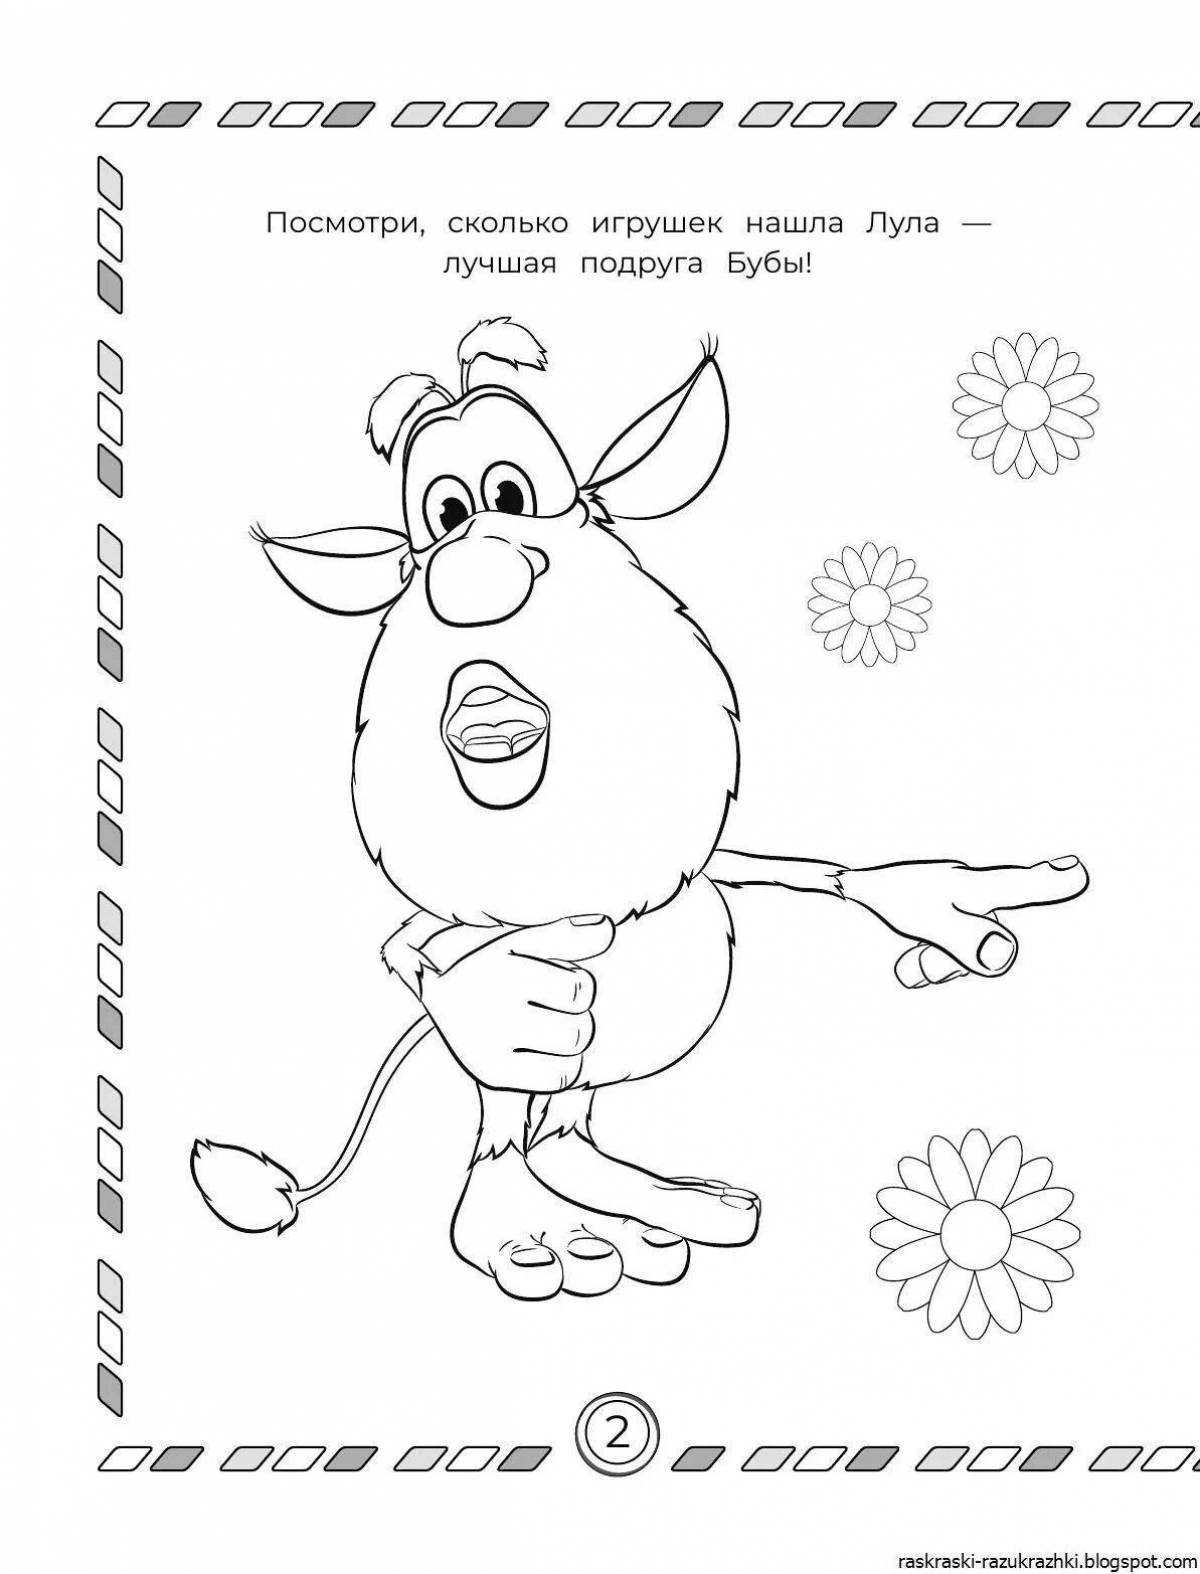 Glorious buba coloring book for kids